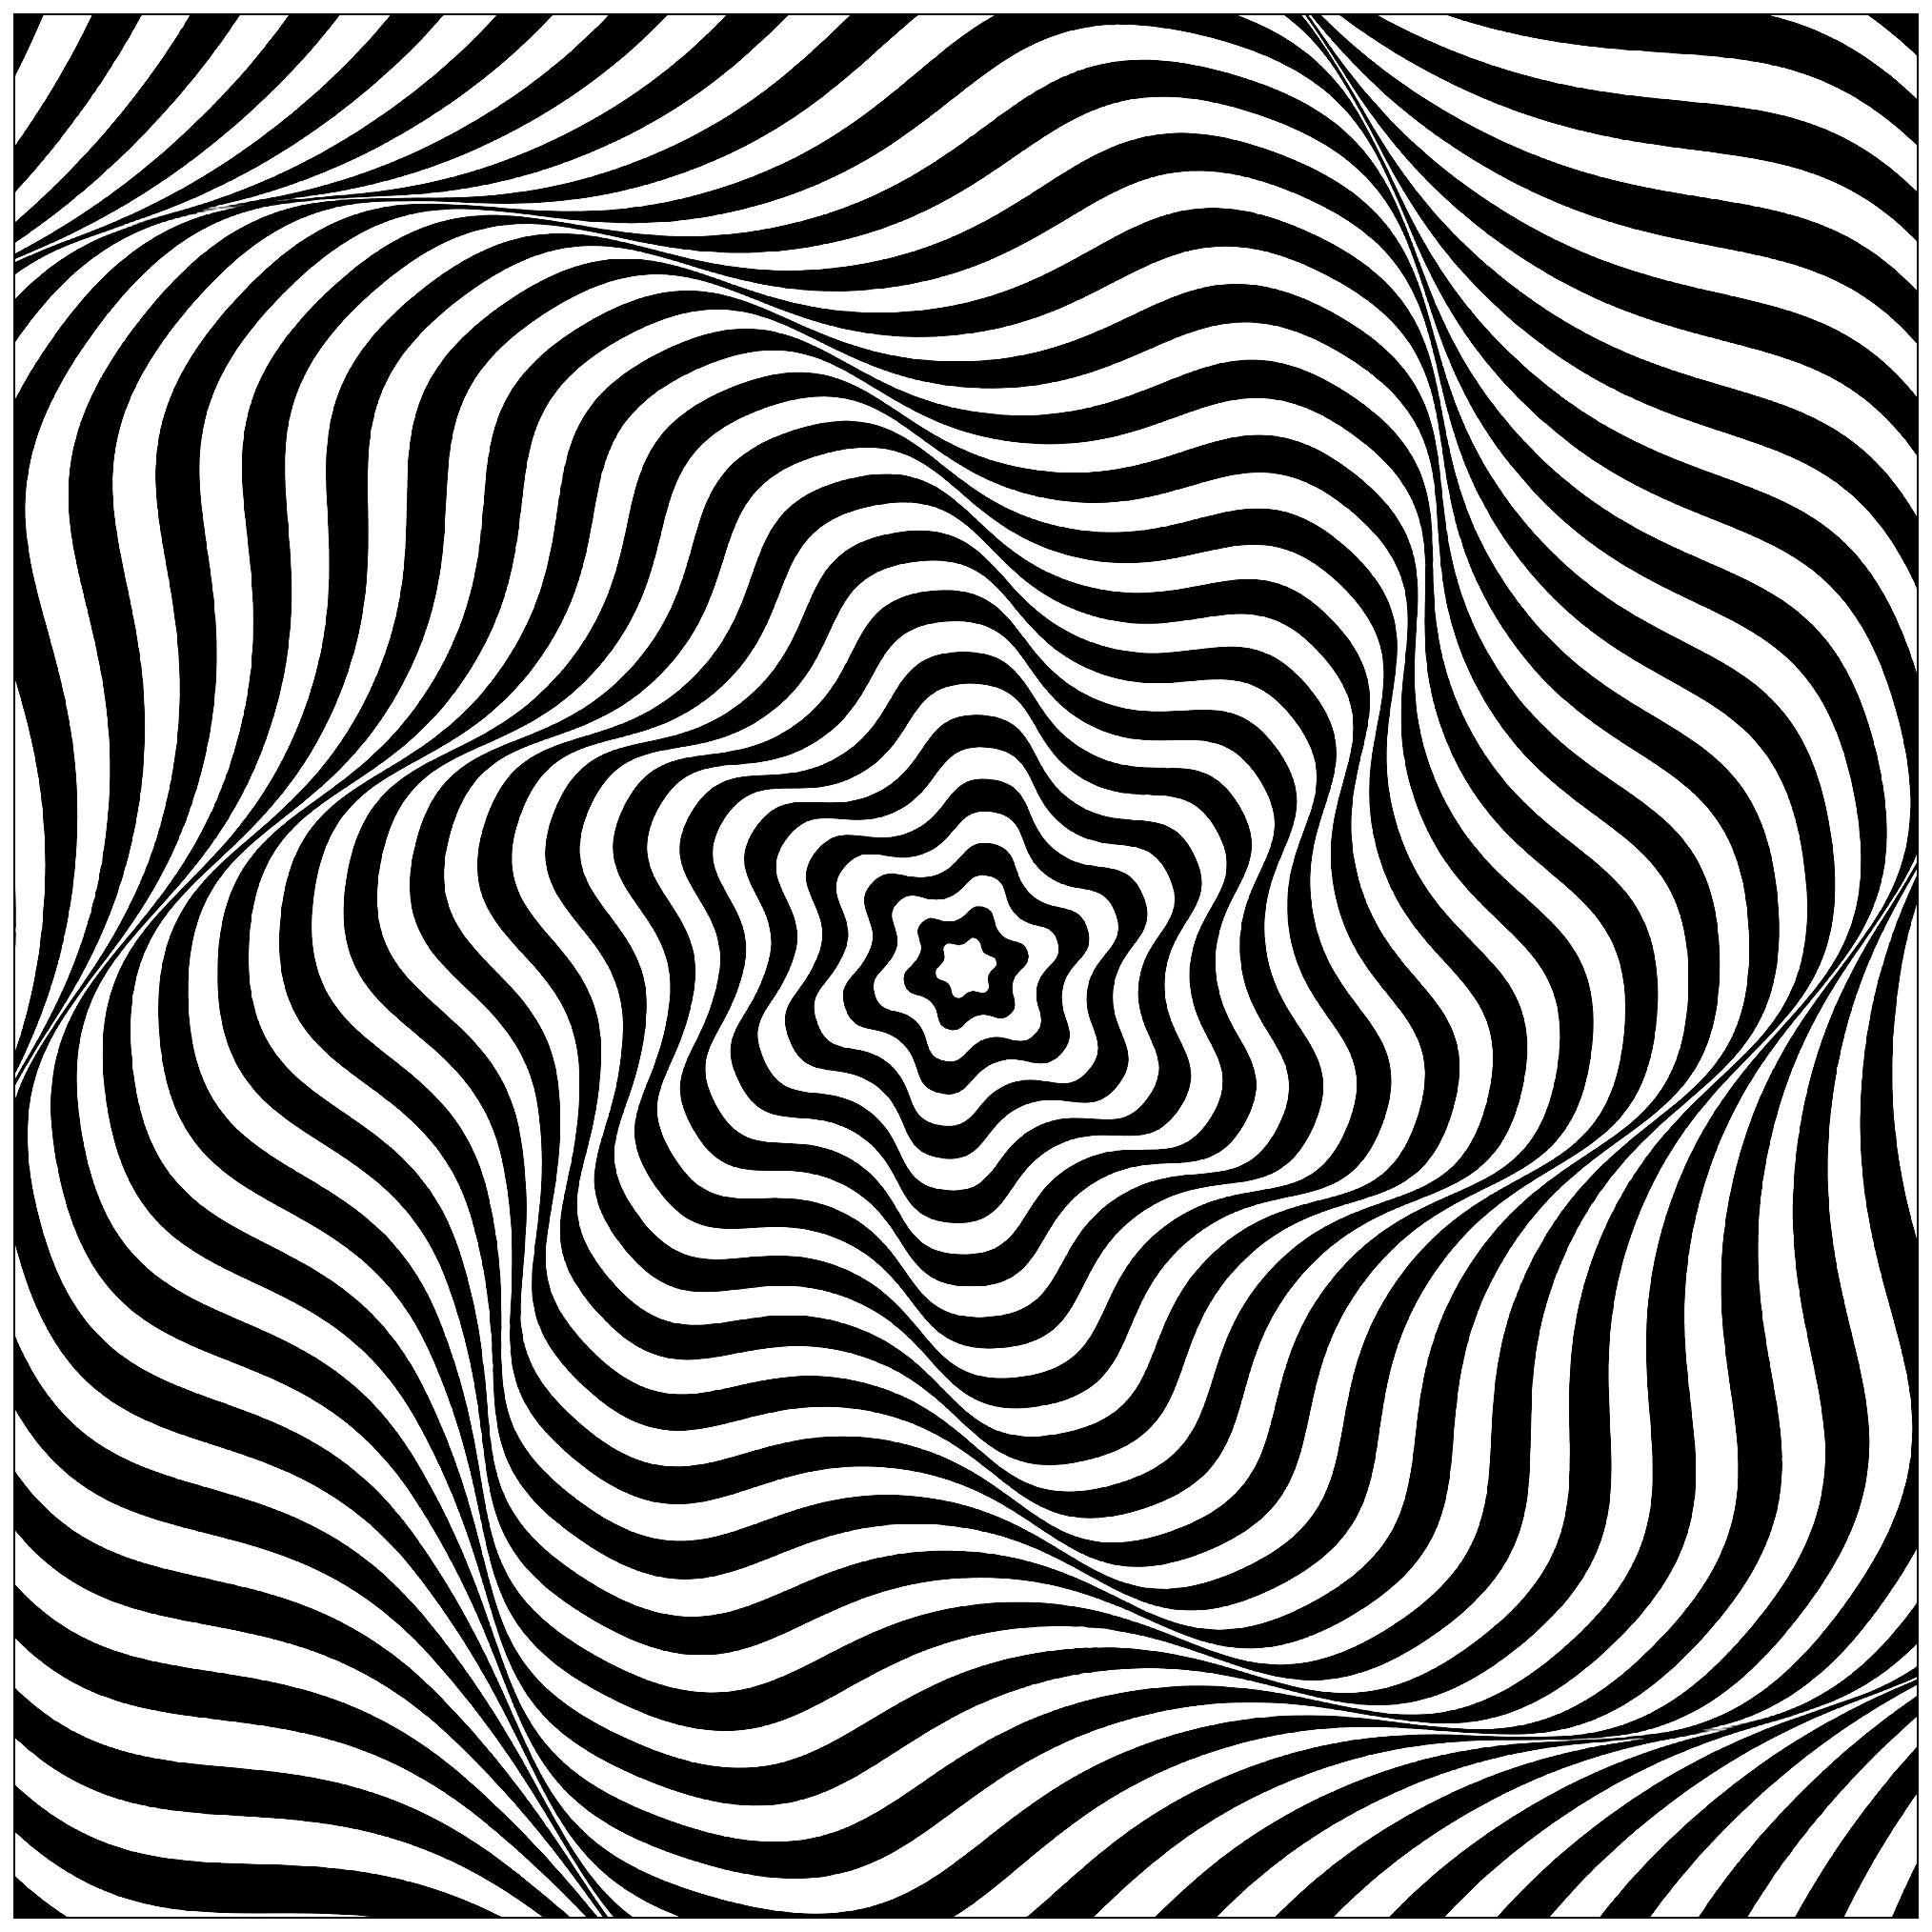 Optical illusion : Wavy Rotary movement, Artist : Troyka